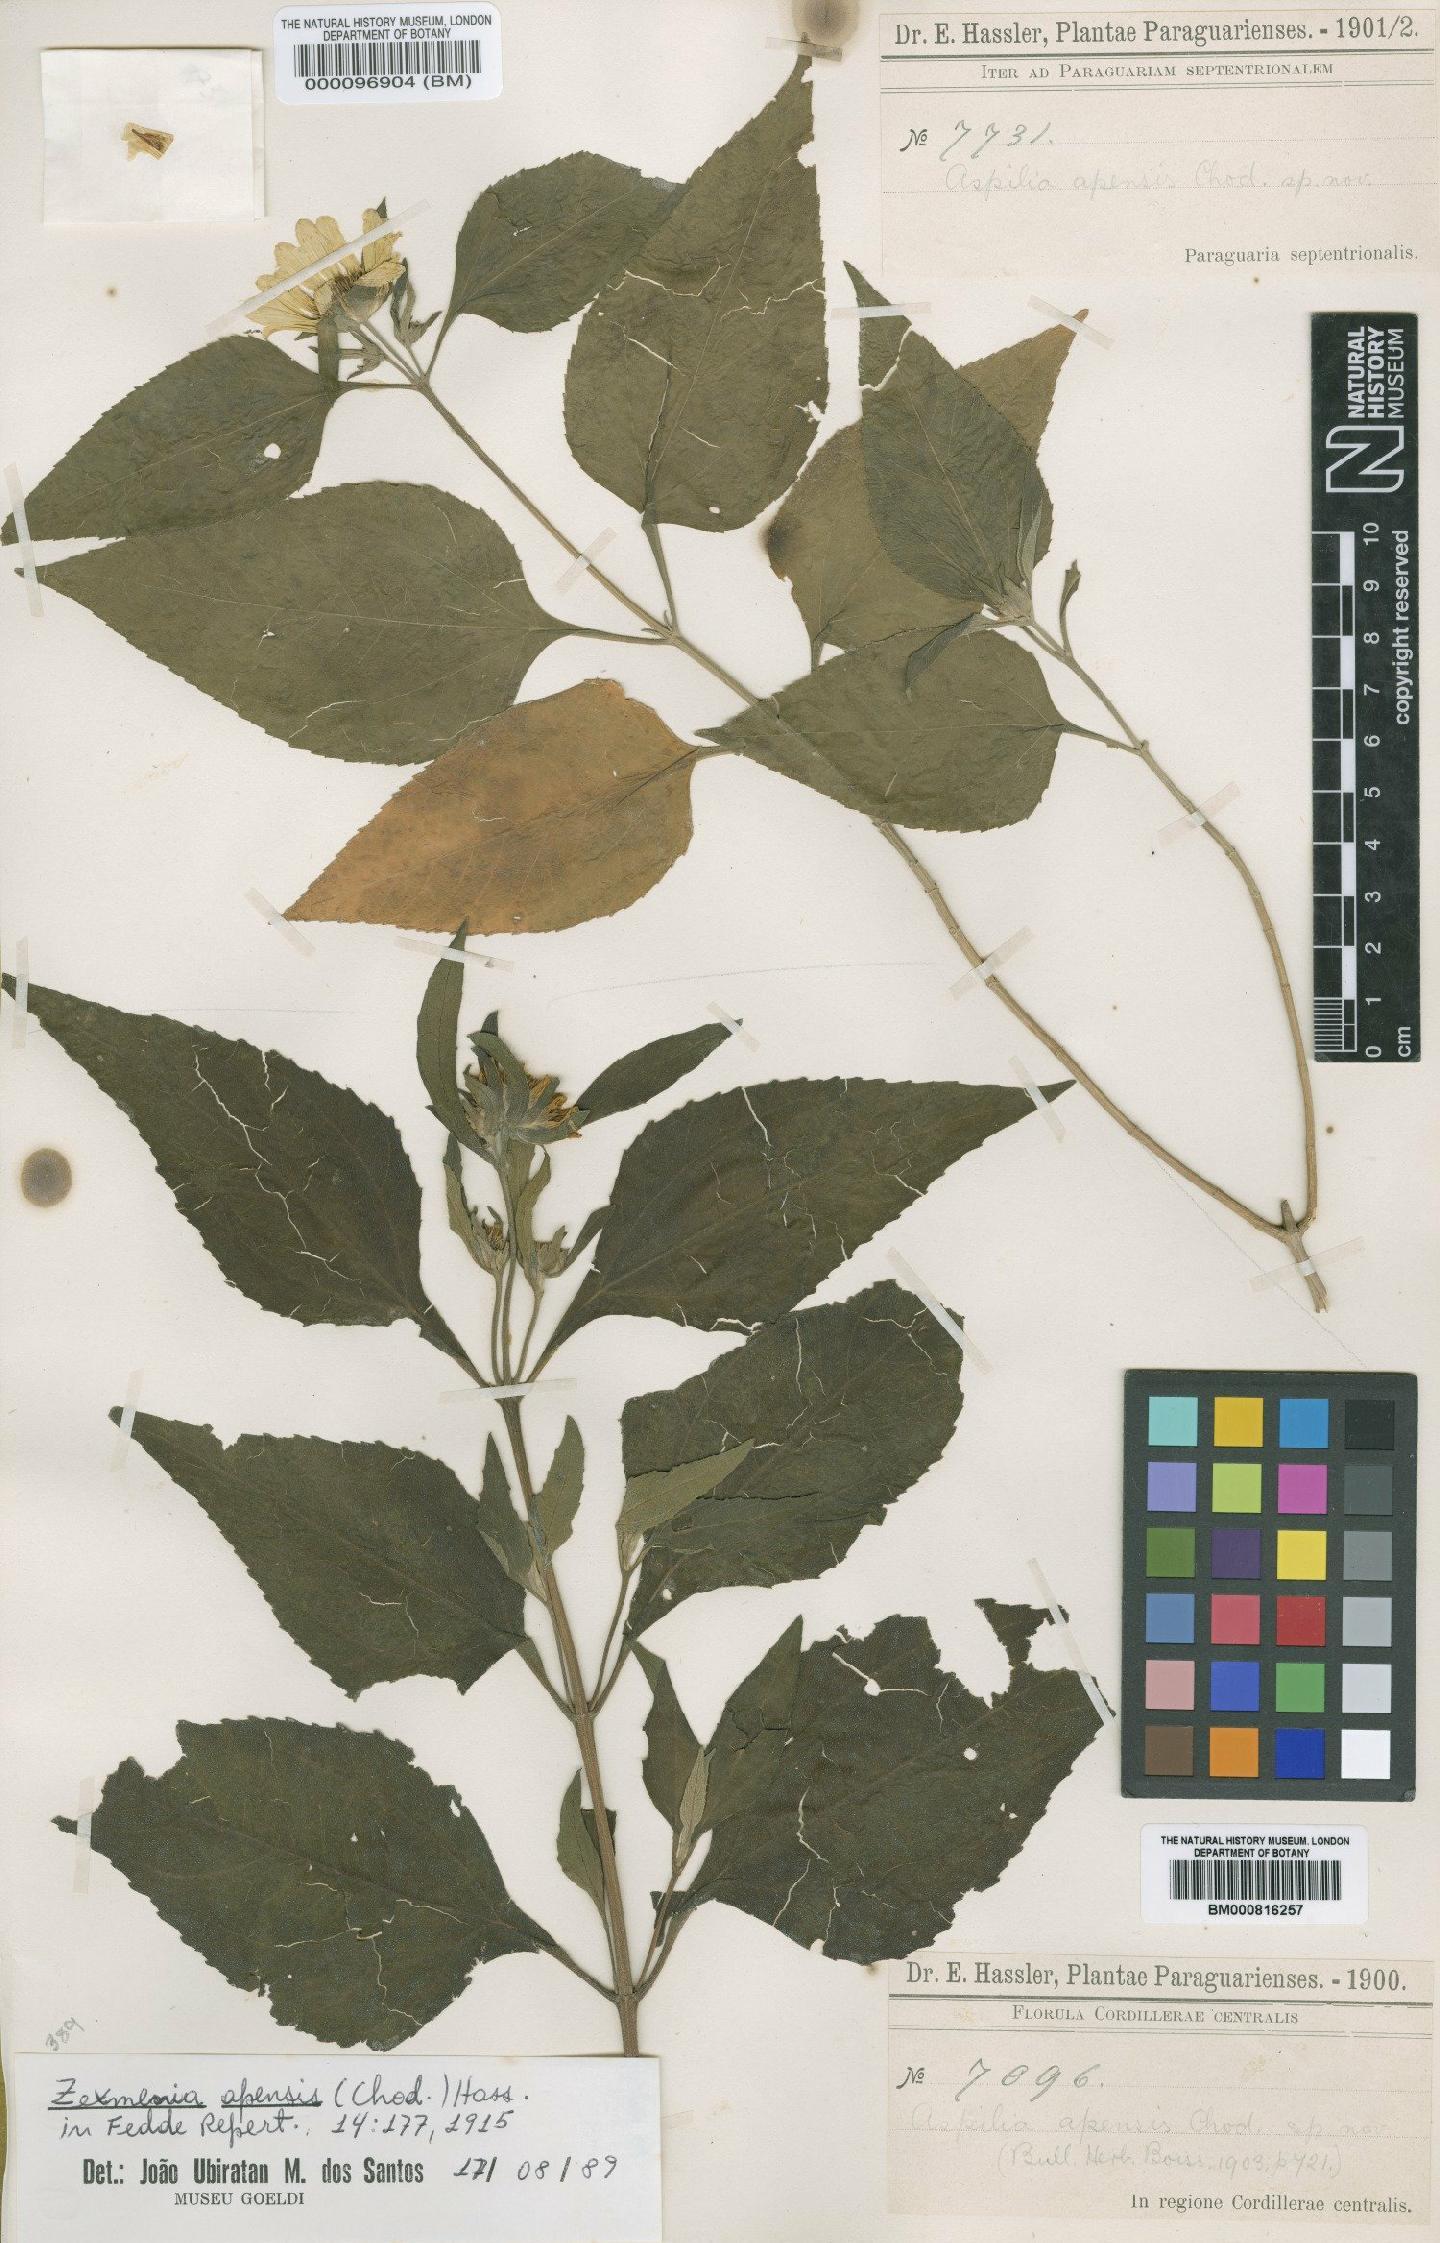 To NHMUK collection (Aspilia apensis Chodat; Type; NHMUK:ecatalogue:4567690)